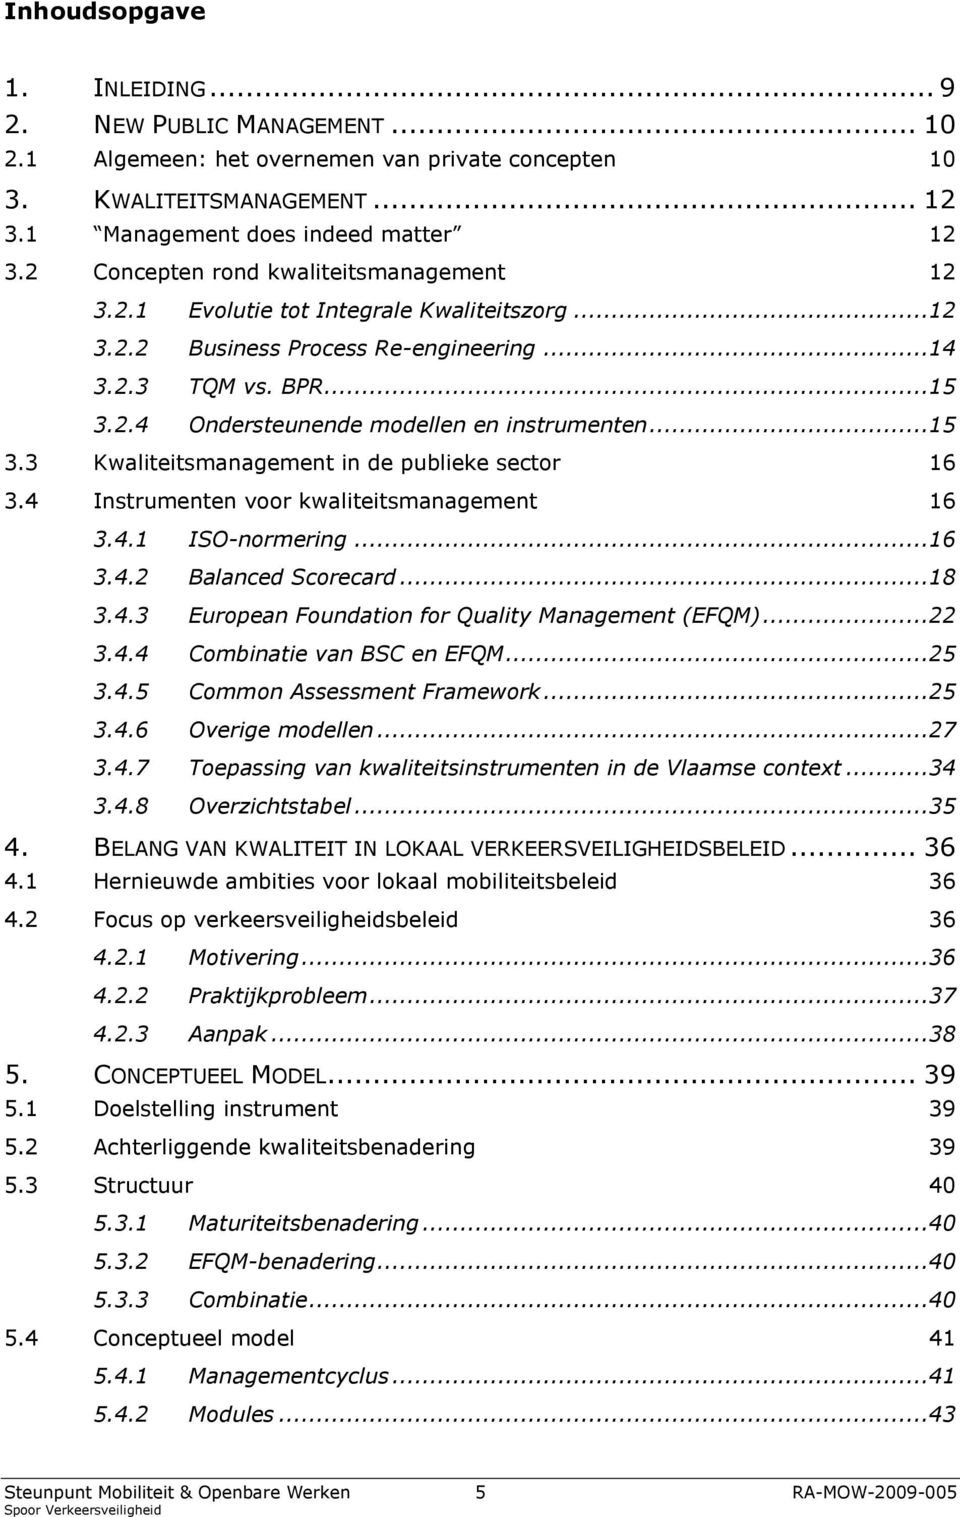 ..15 3.3 Kwaliteitsmanagement in de publieke sector 16 3.4 Instrumenten voor kwaliteitsmanagement 16 3.4.1 ISO-normering...16 3.4.2 Balanced Scorecard...18 3.4.3 European Foundation for Quality Management (EFQM).